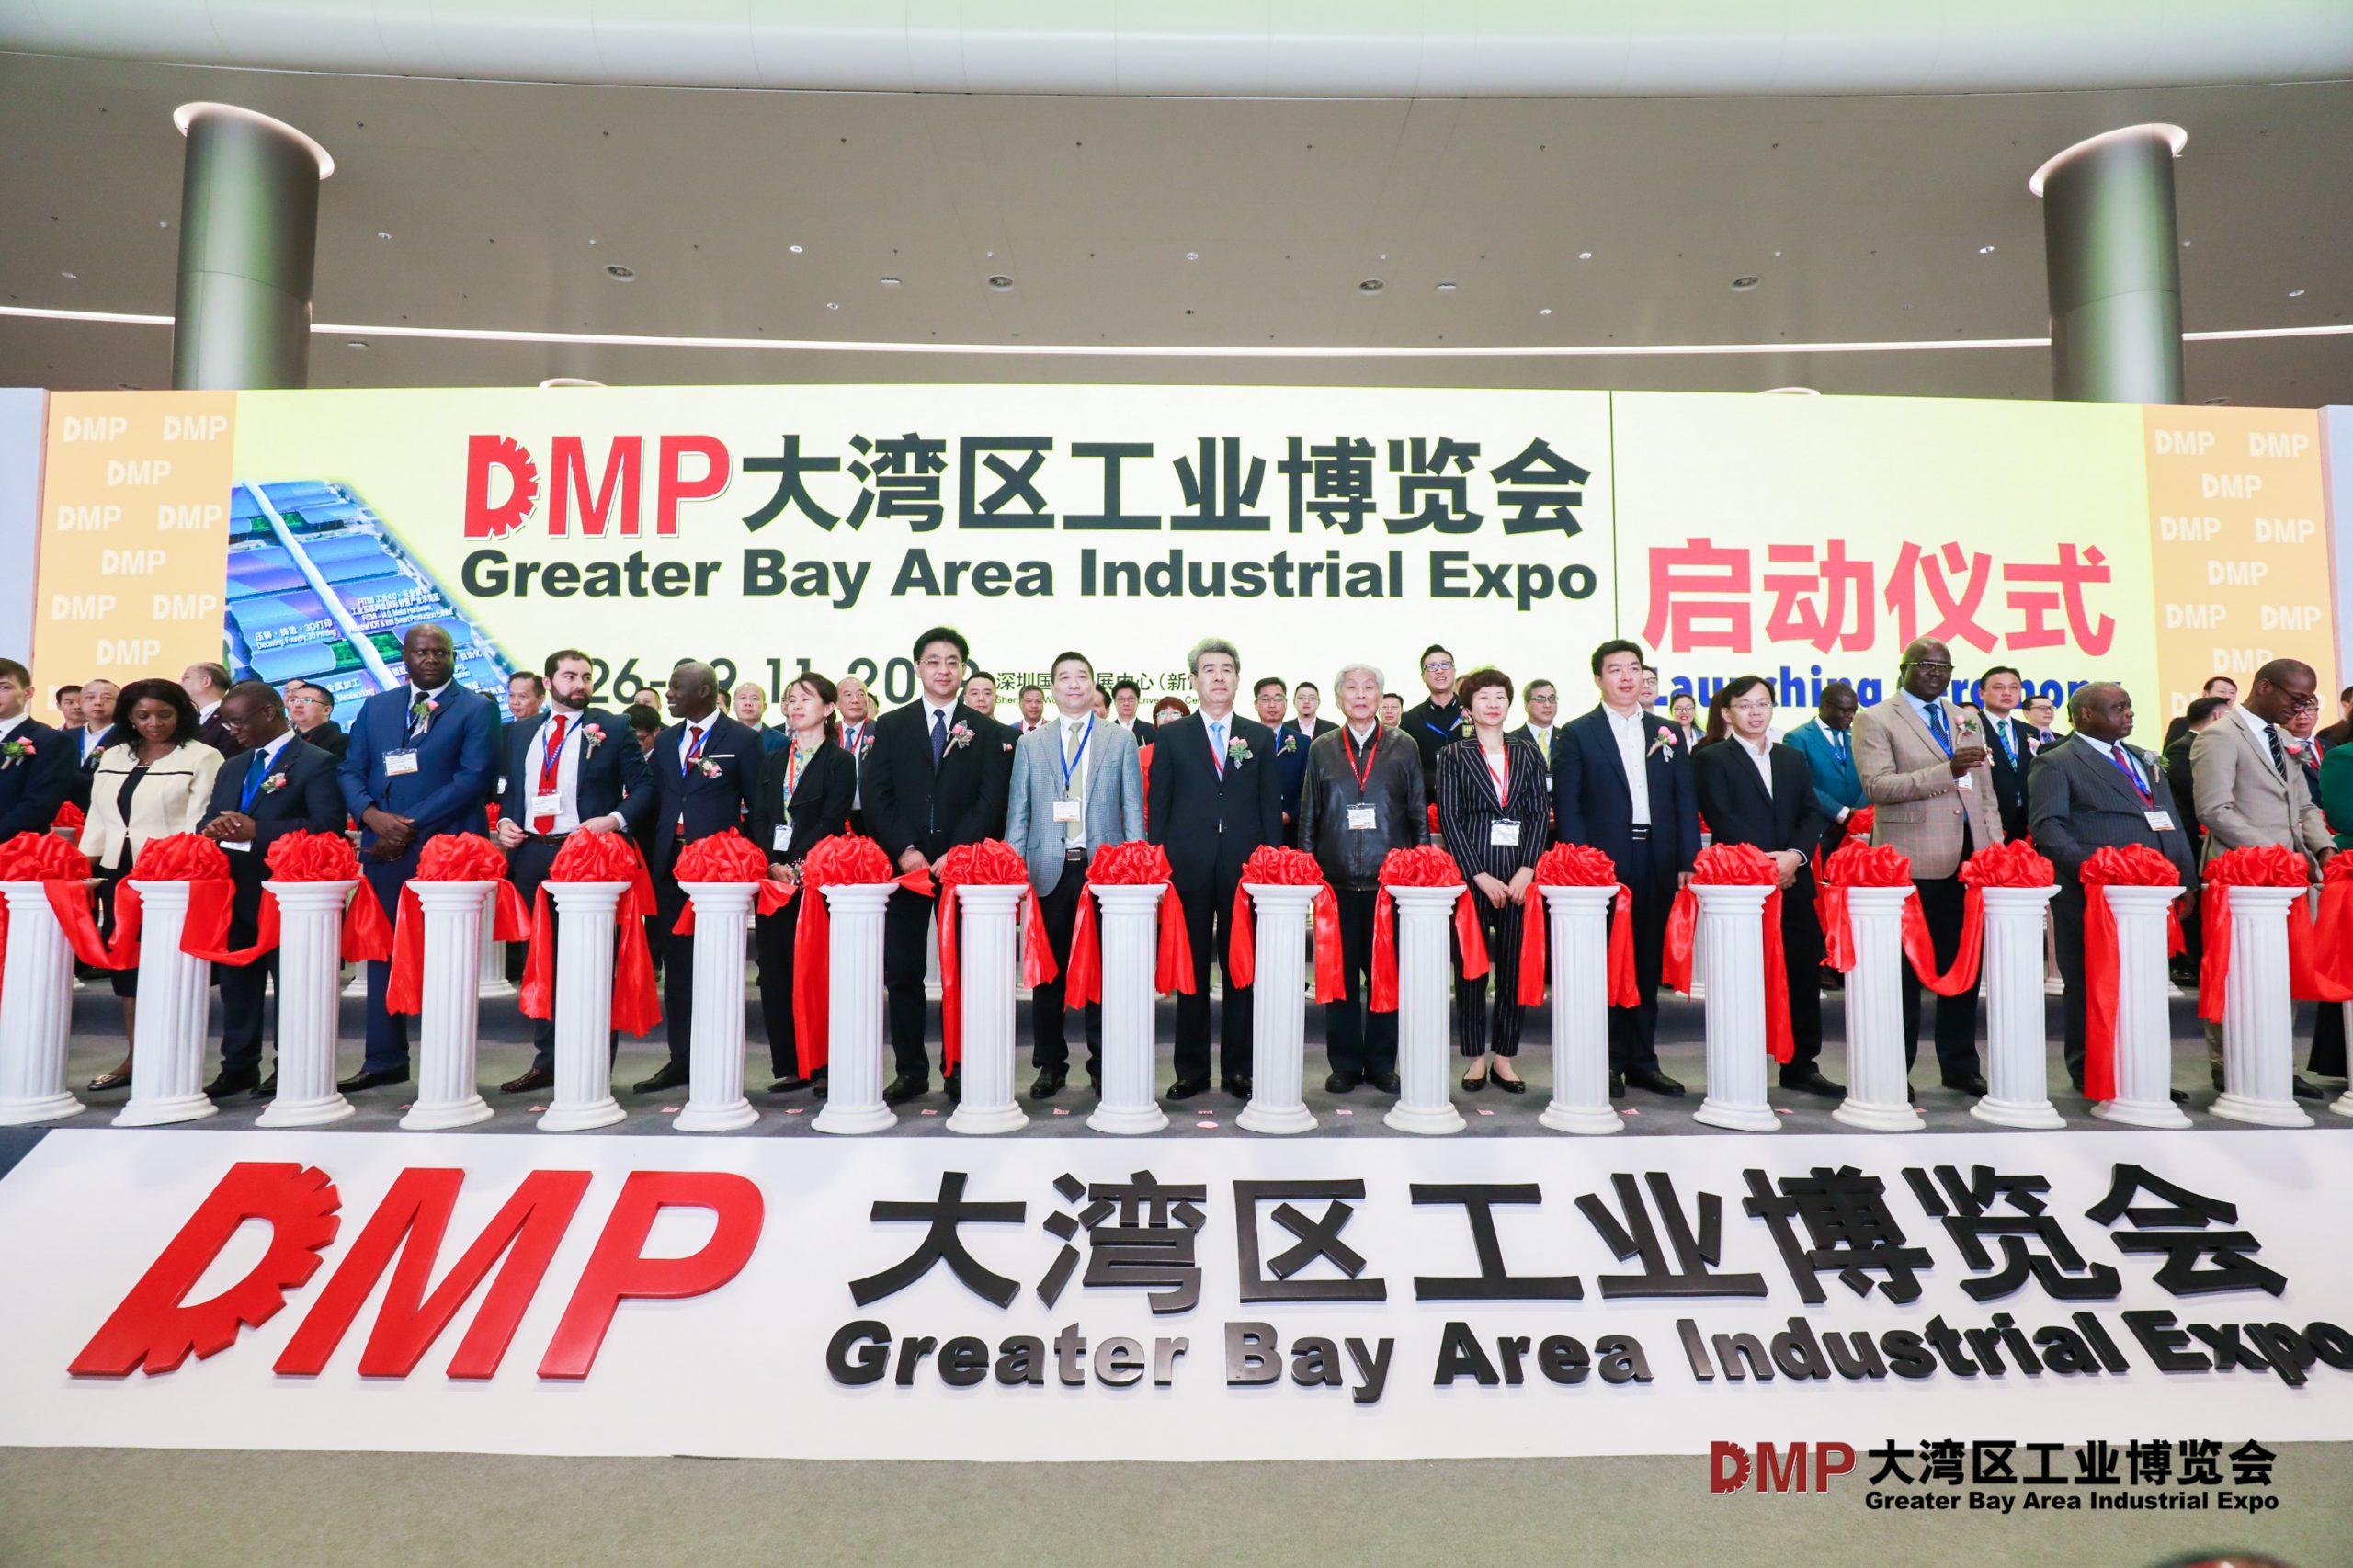 DMP大湾区工业博览会 开幕仪式